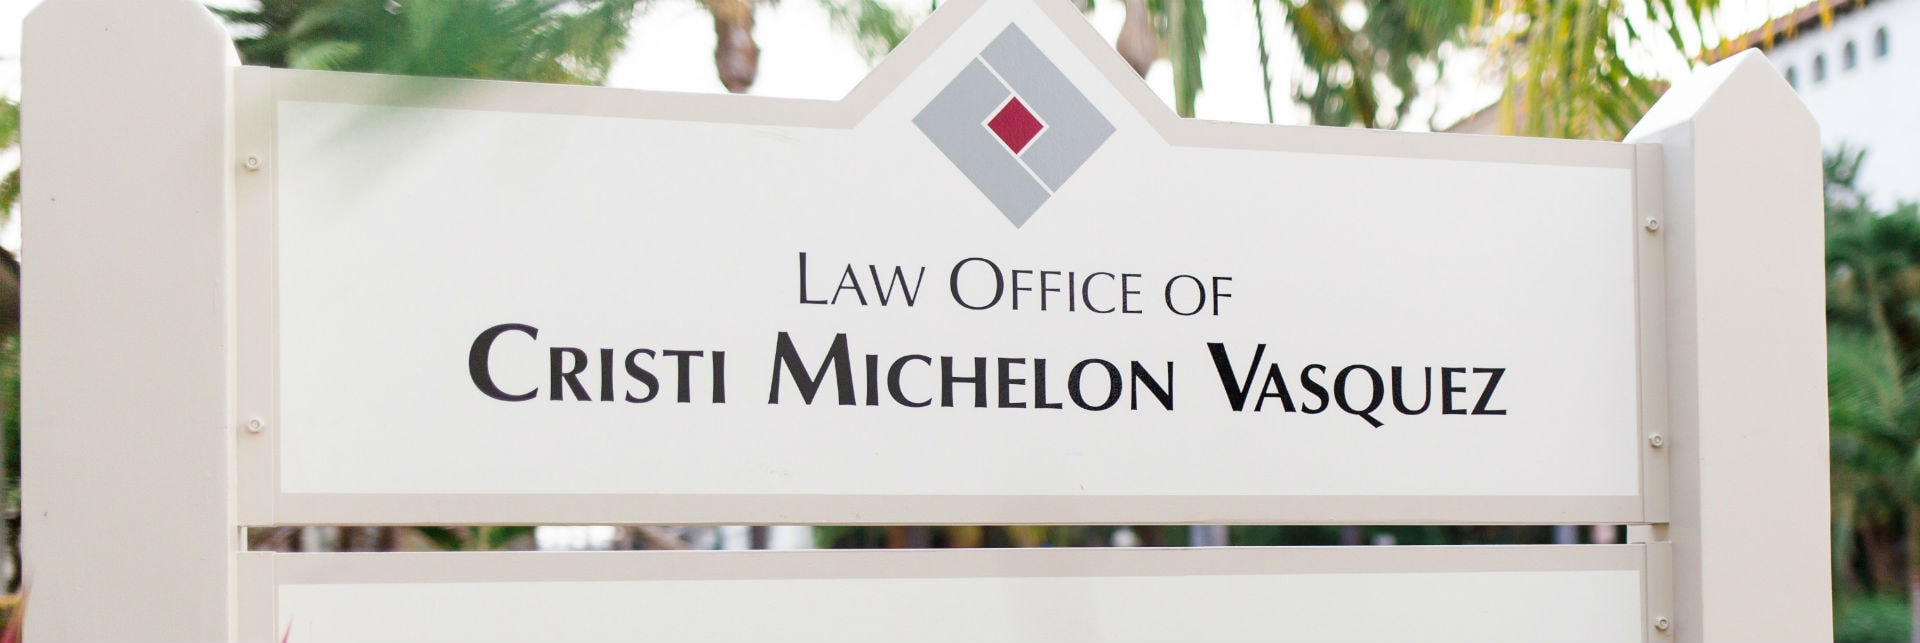 Sign for Law Office of Cristi Michelon Vasquez.